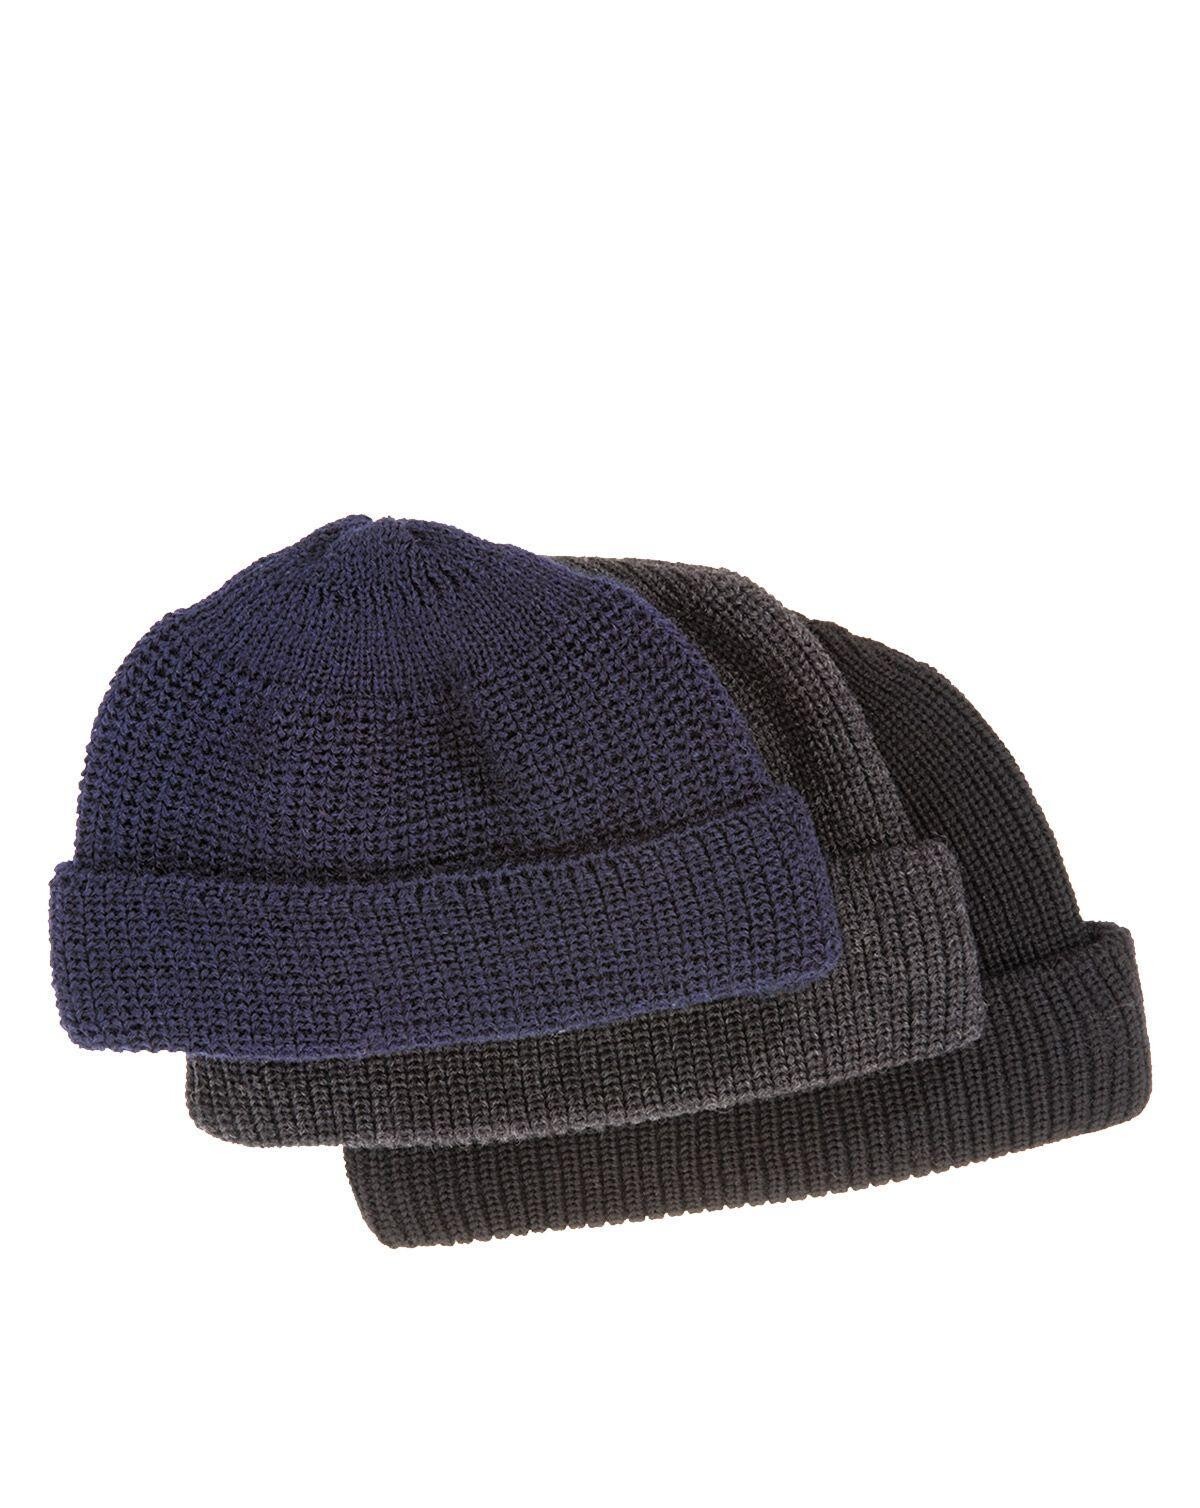 #3 - FHB Uld hat - Johann (Navy, One Size)